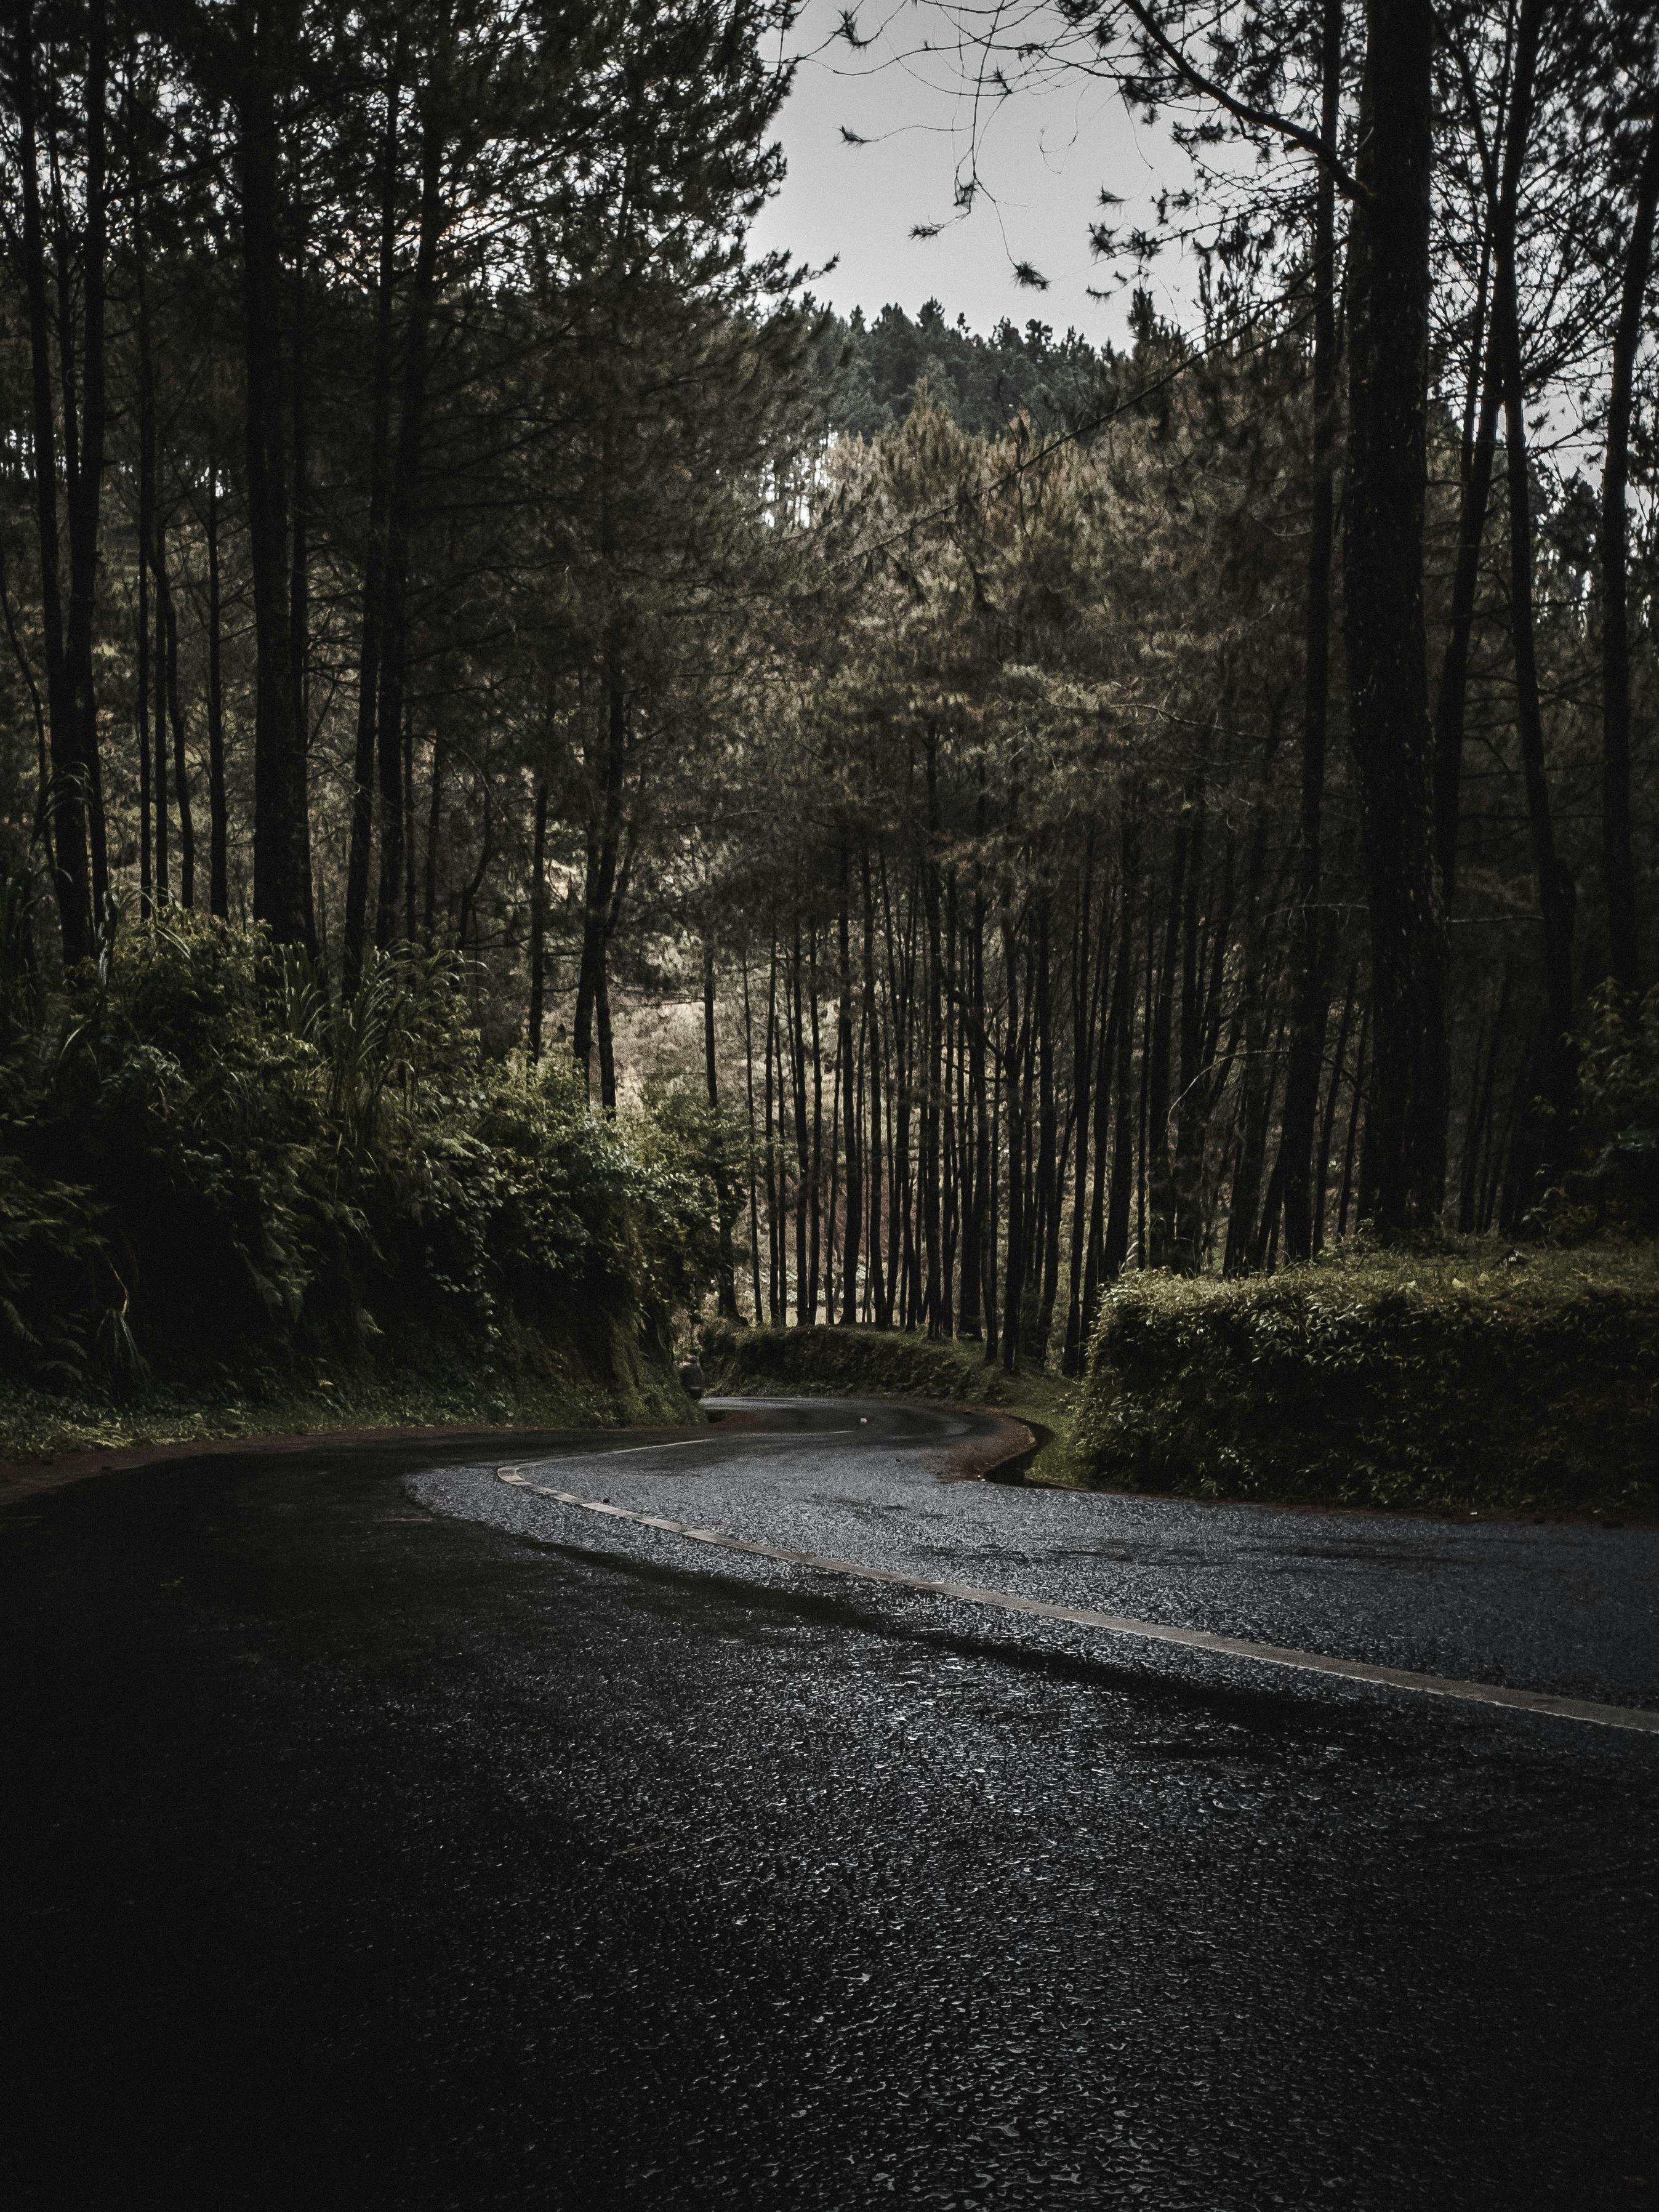 Gray Asphalt Road Between Bare Trees · Free Stock Photo